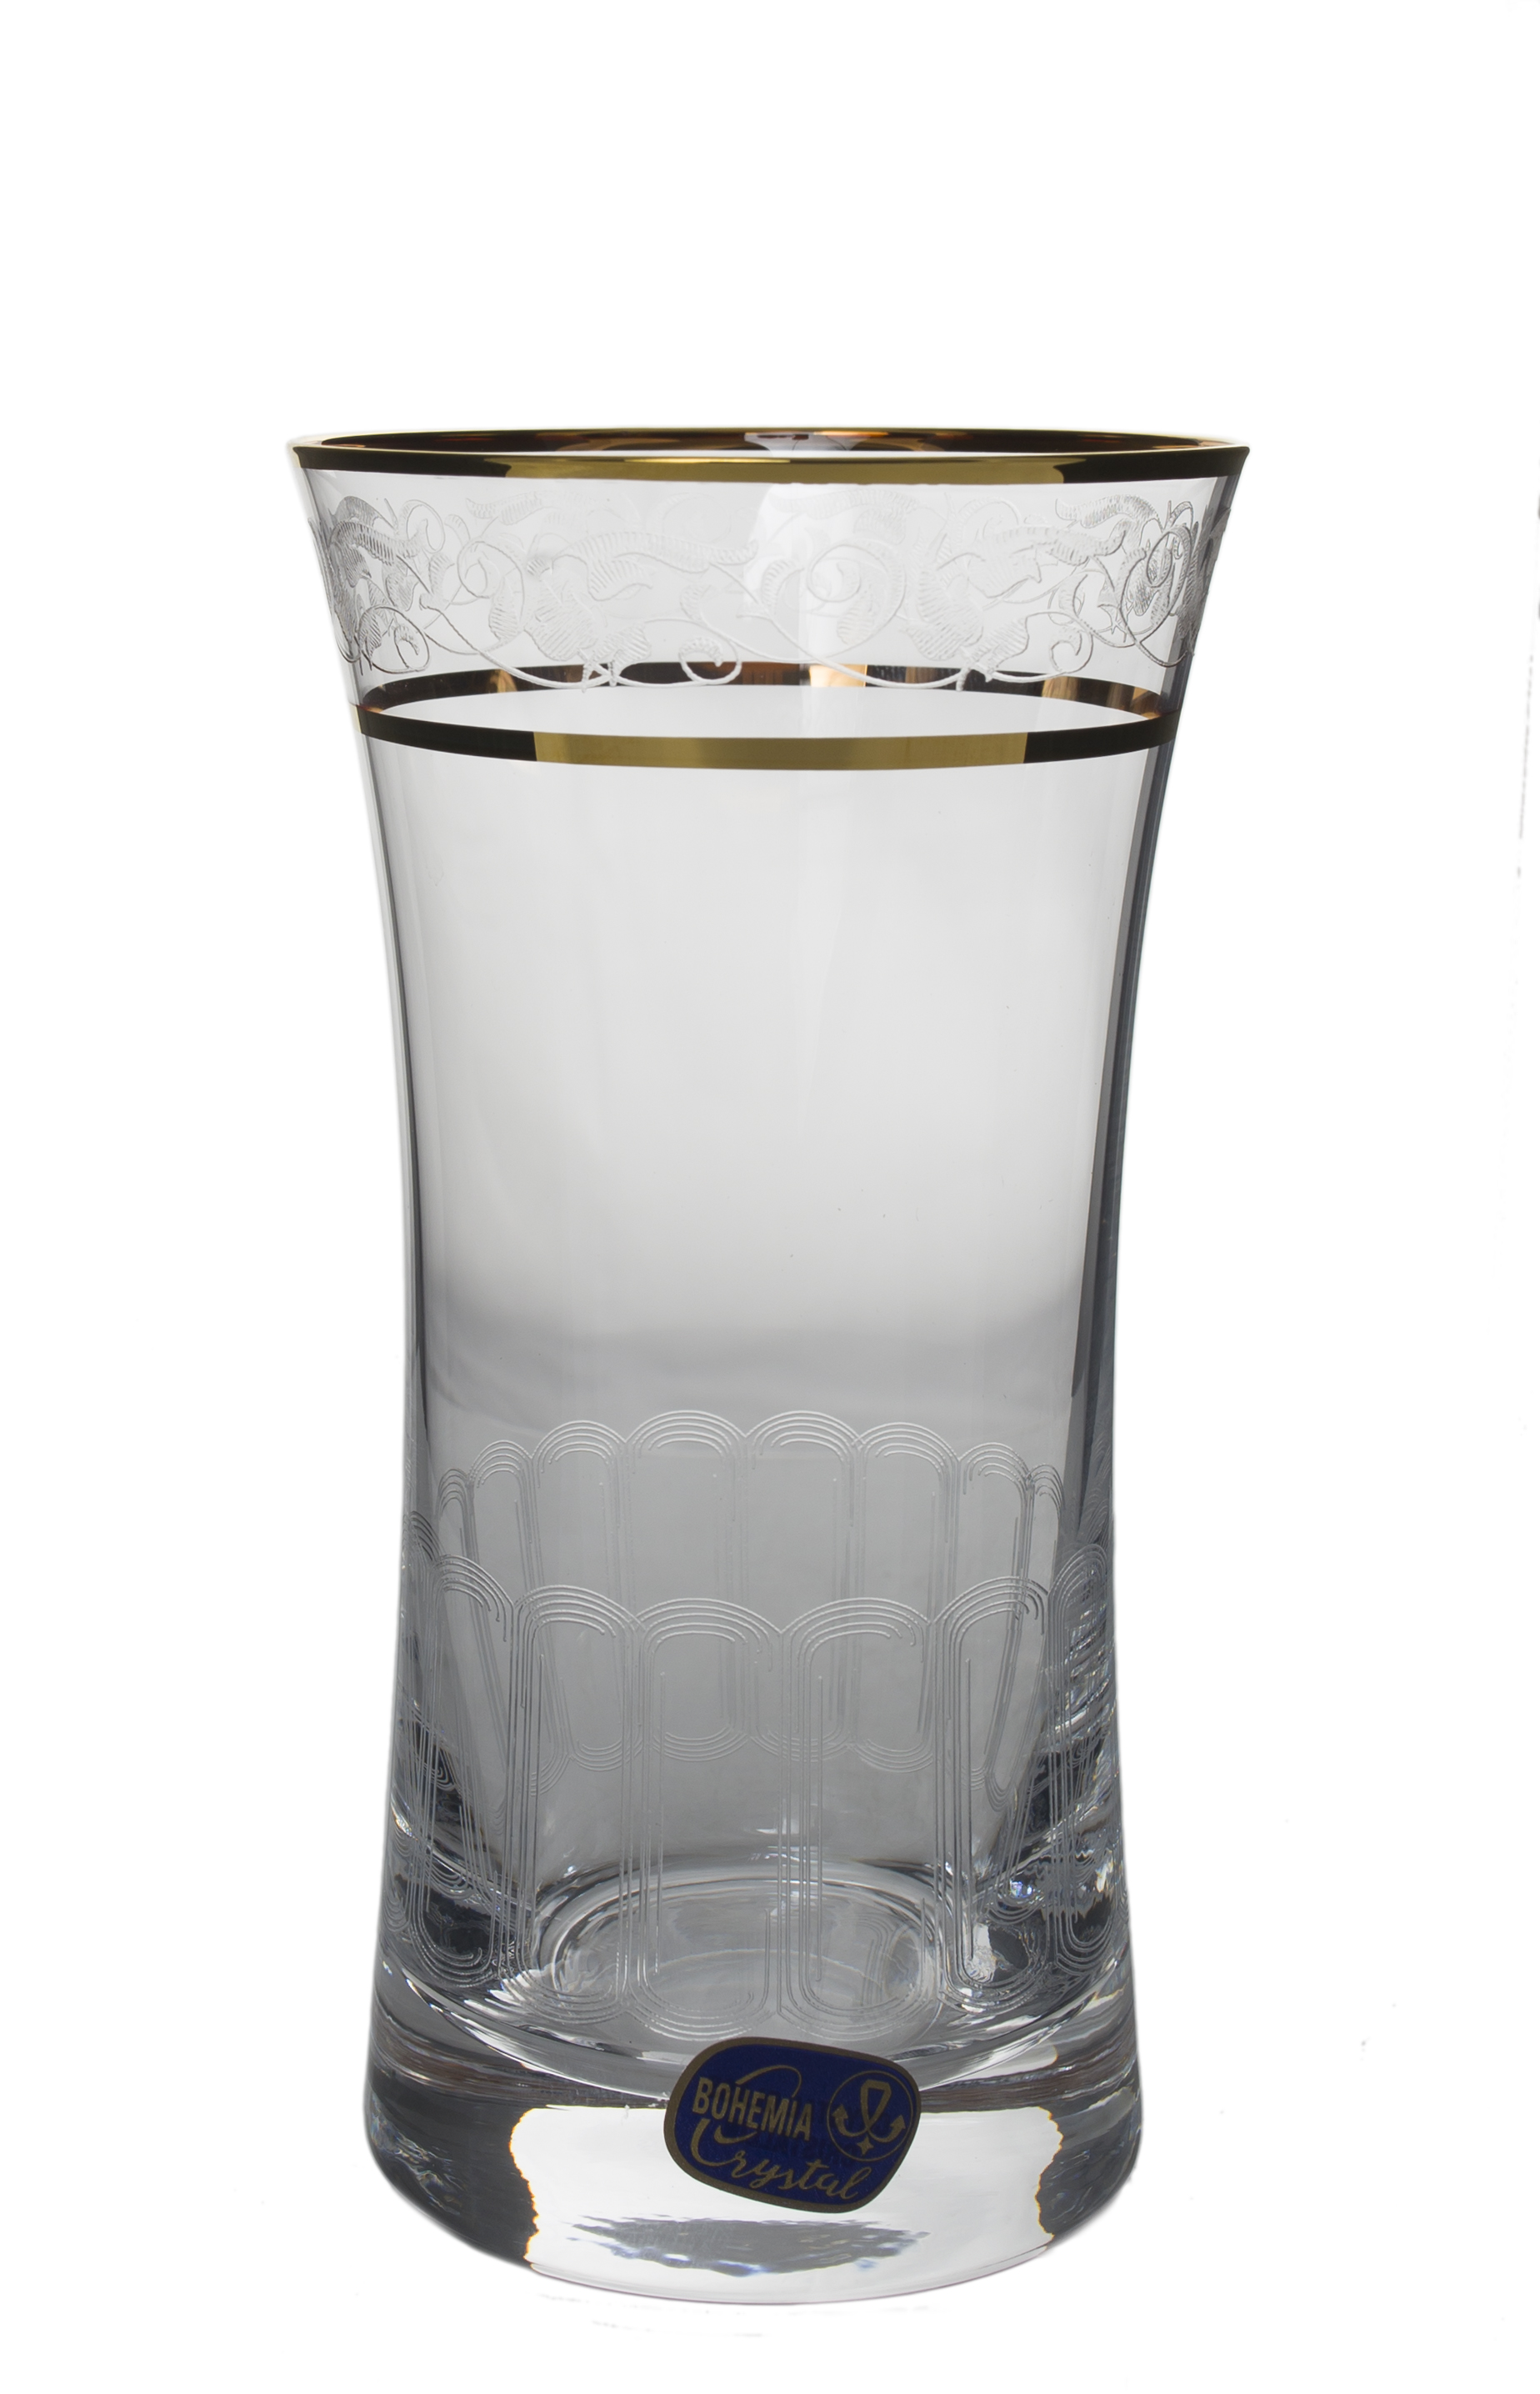 GRACE decor aur - Set 6 pahare sticla cristalina apa 340 ml